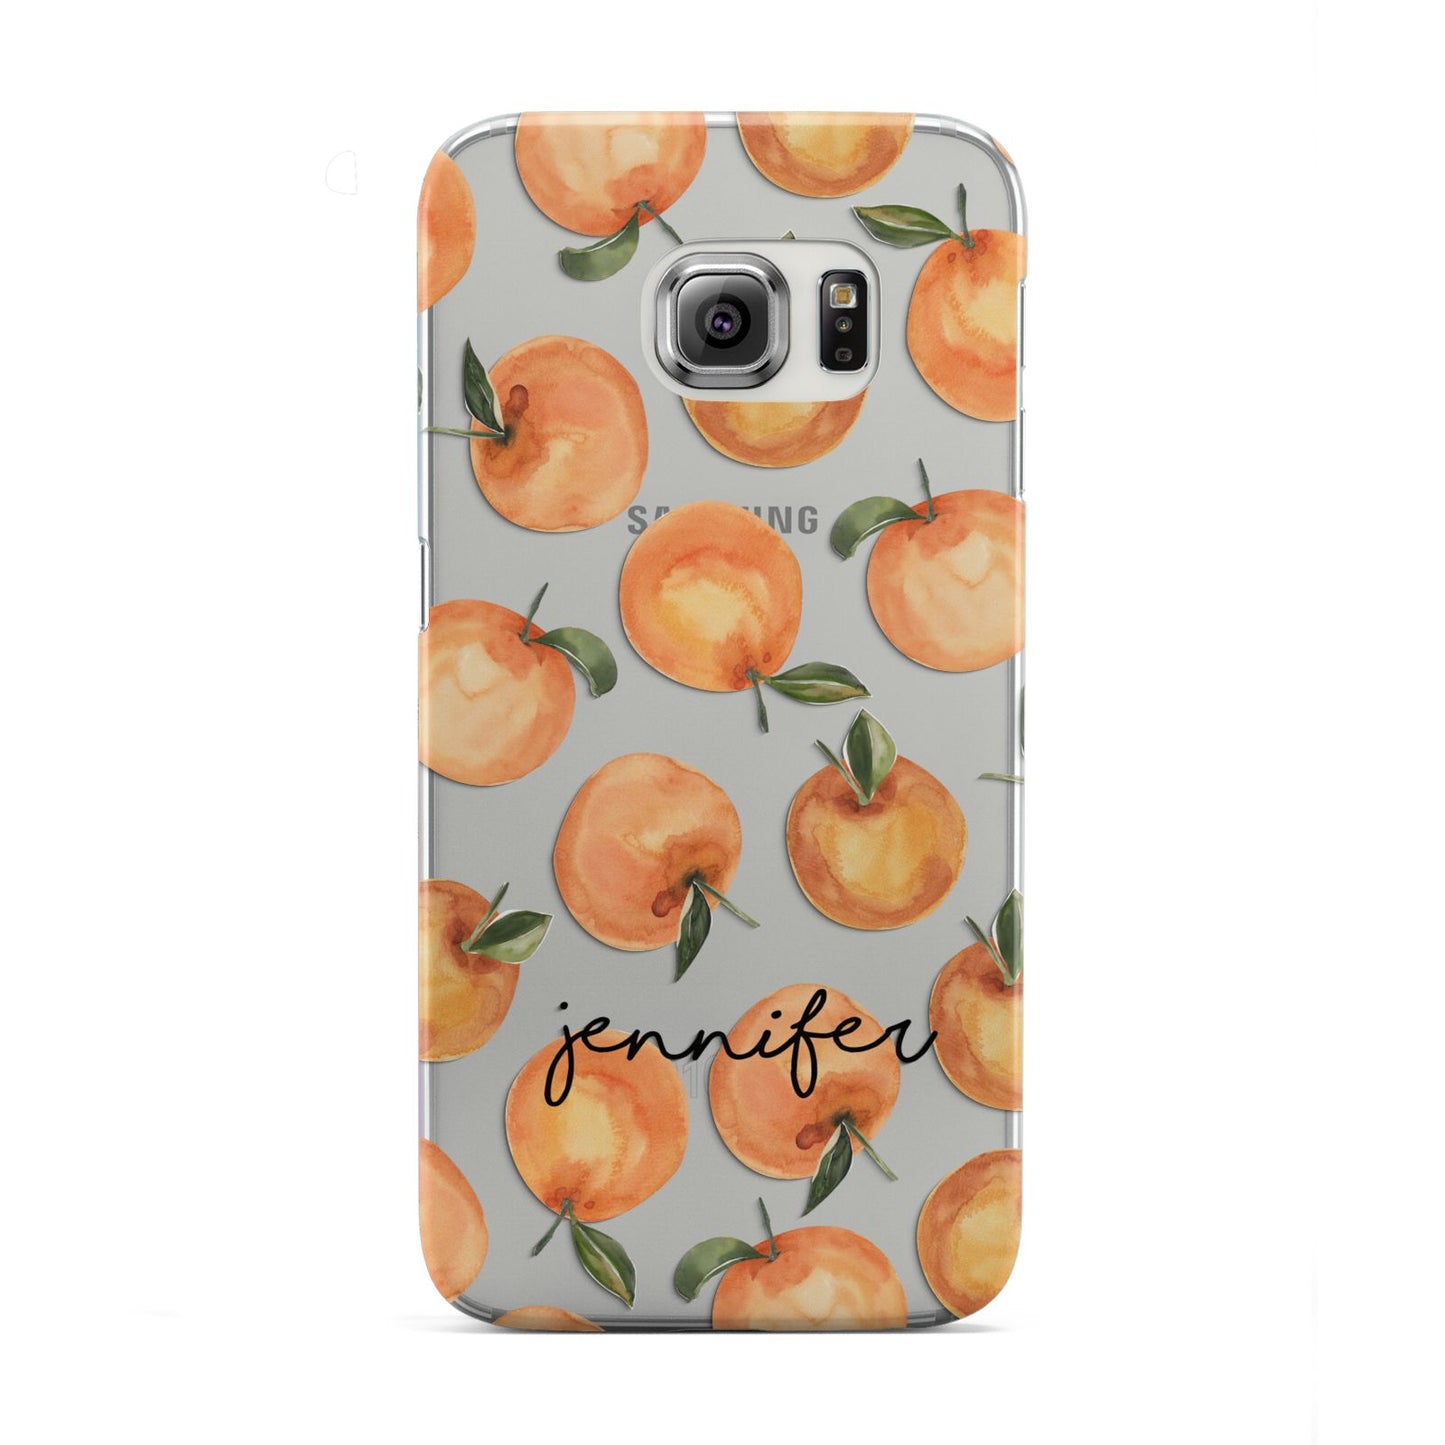 Personalised Oranges Name Samsung Galaxy S6 Edge Case